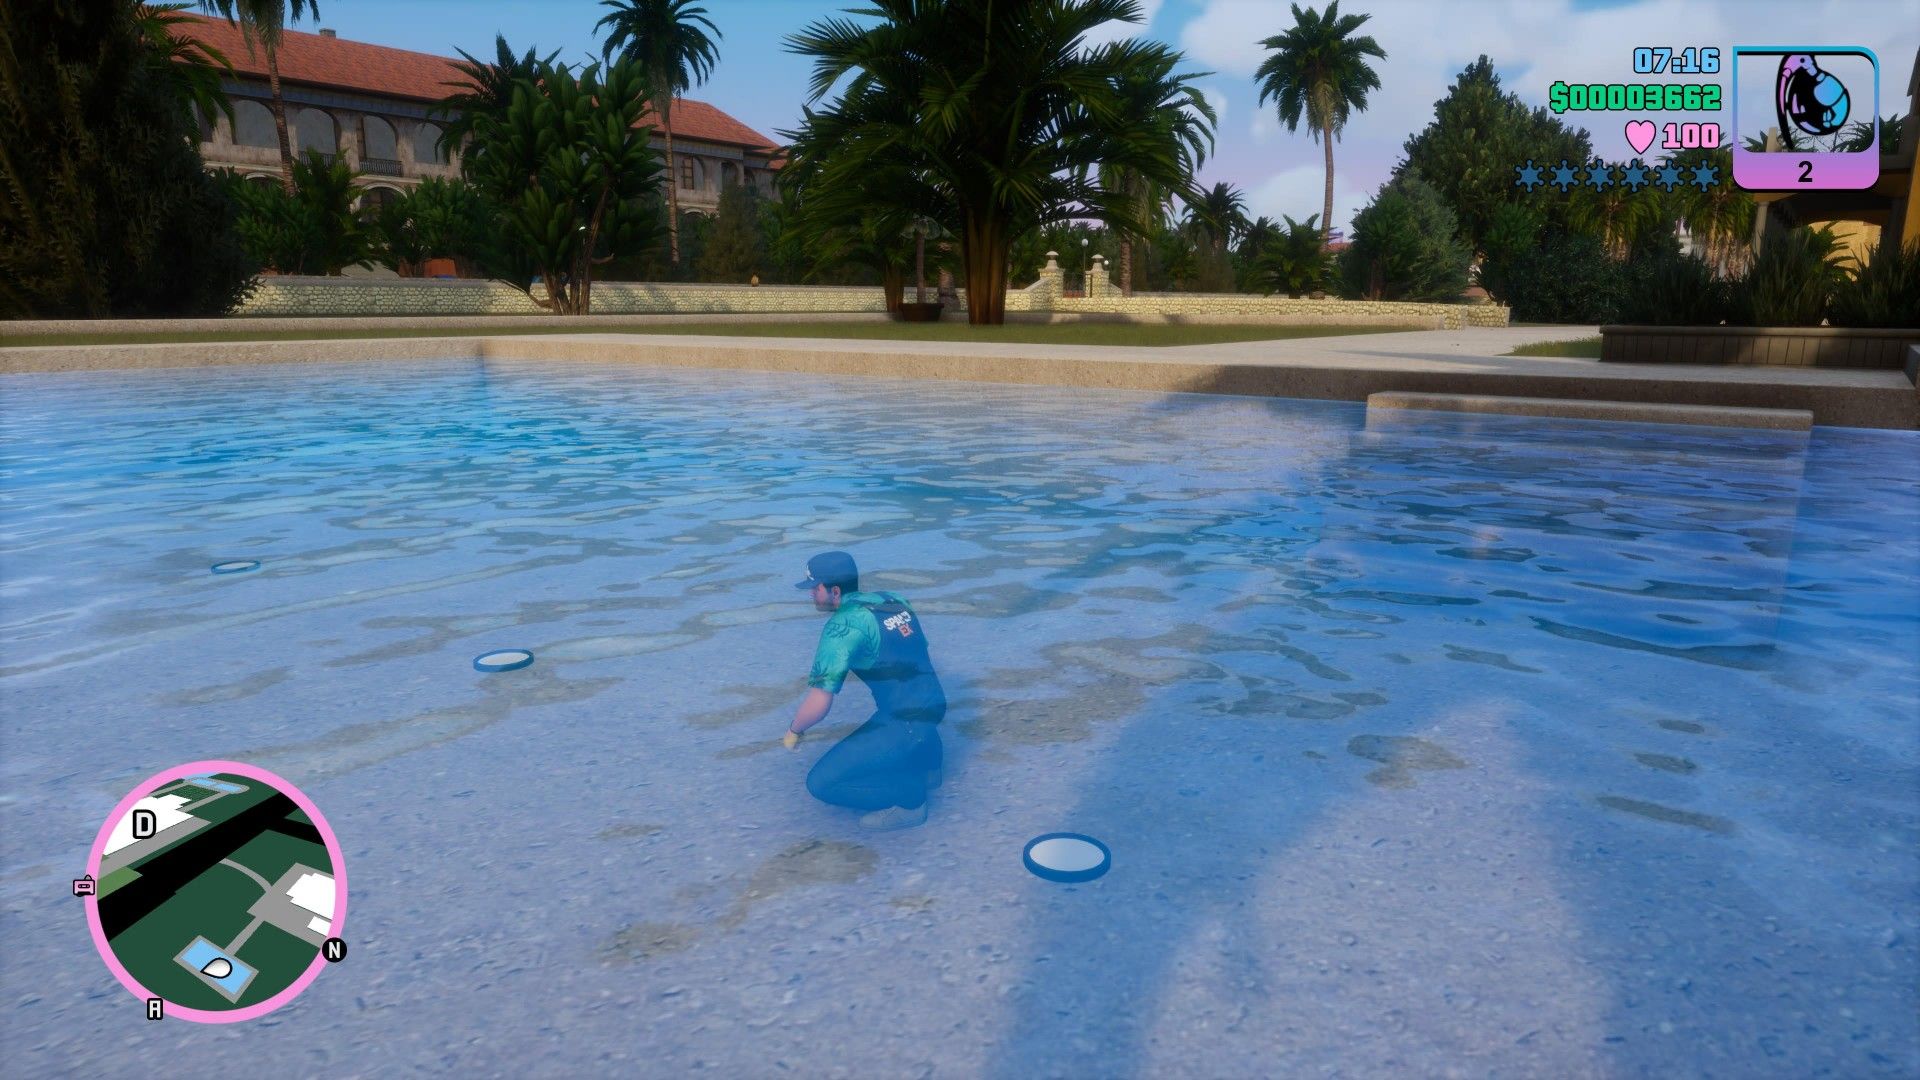 Grand Theft Auto Vice City Swimming Pool